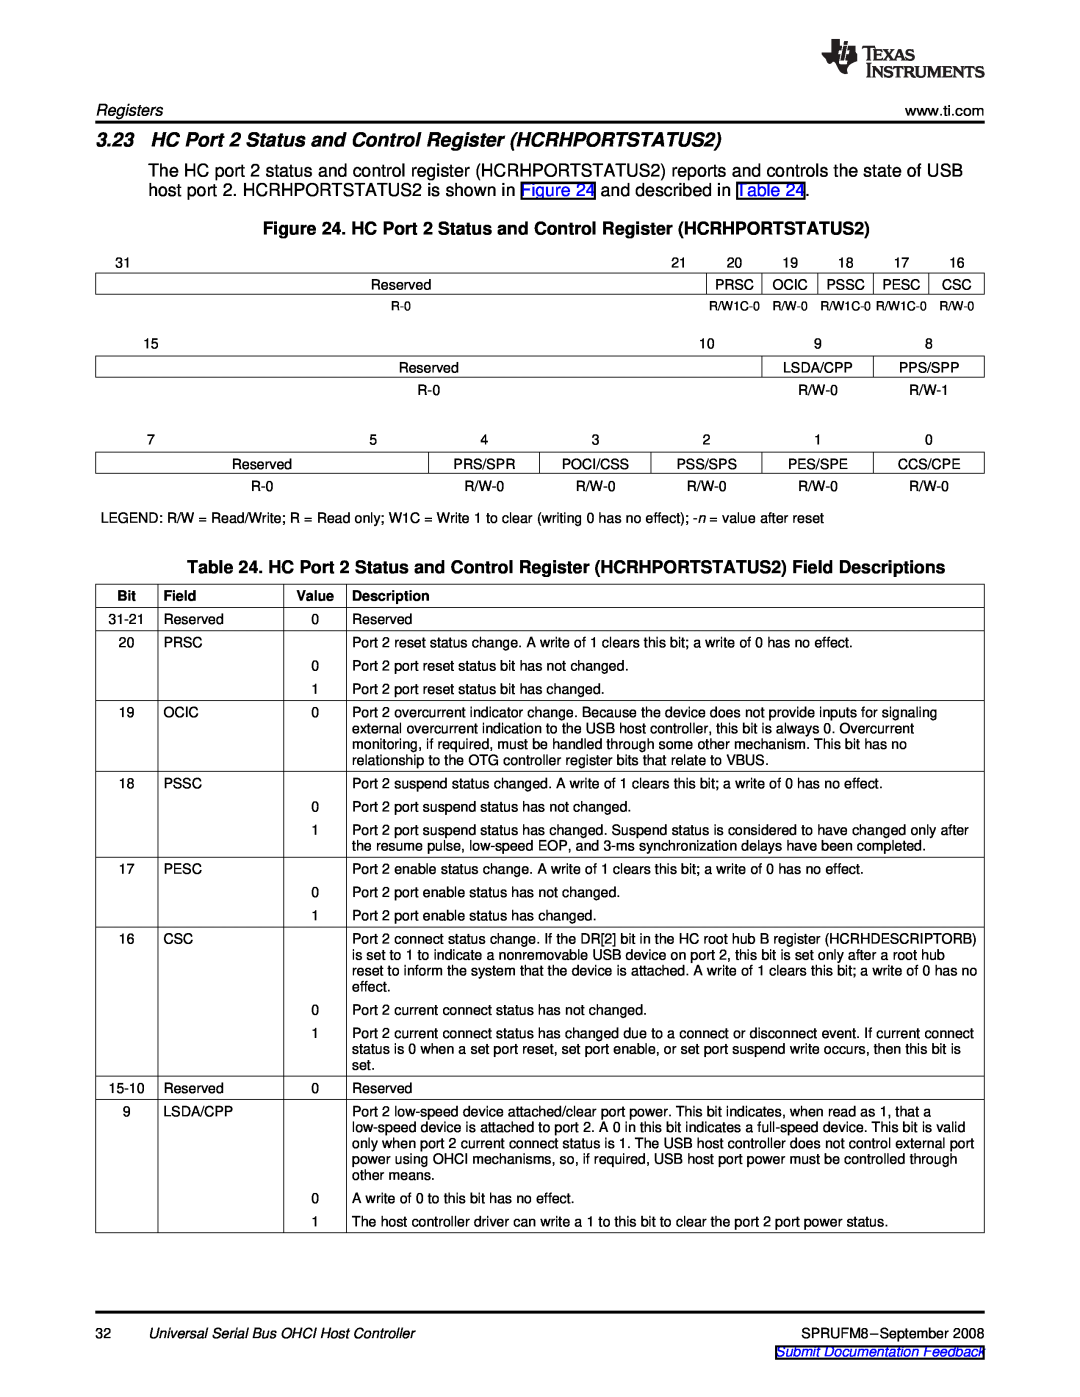 Texas Instruments TMS320C6747 DSP HC Port 2 Status and Control Register HCRHPORTSTATUS2, Registers, Field, Description 